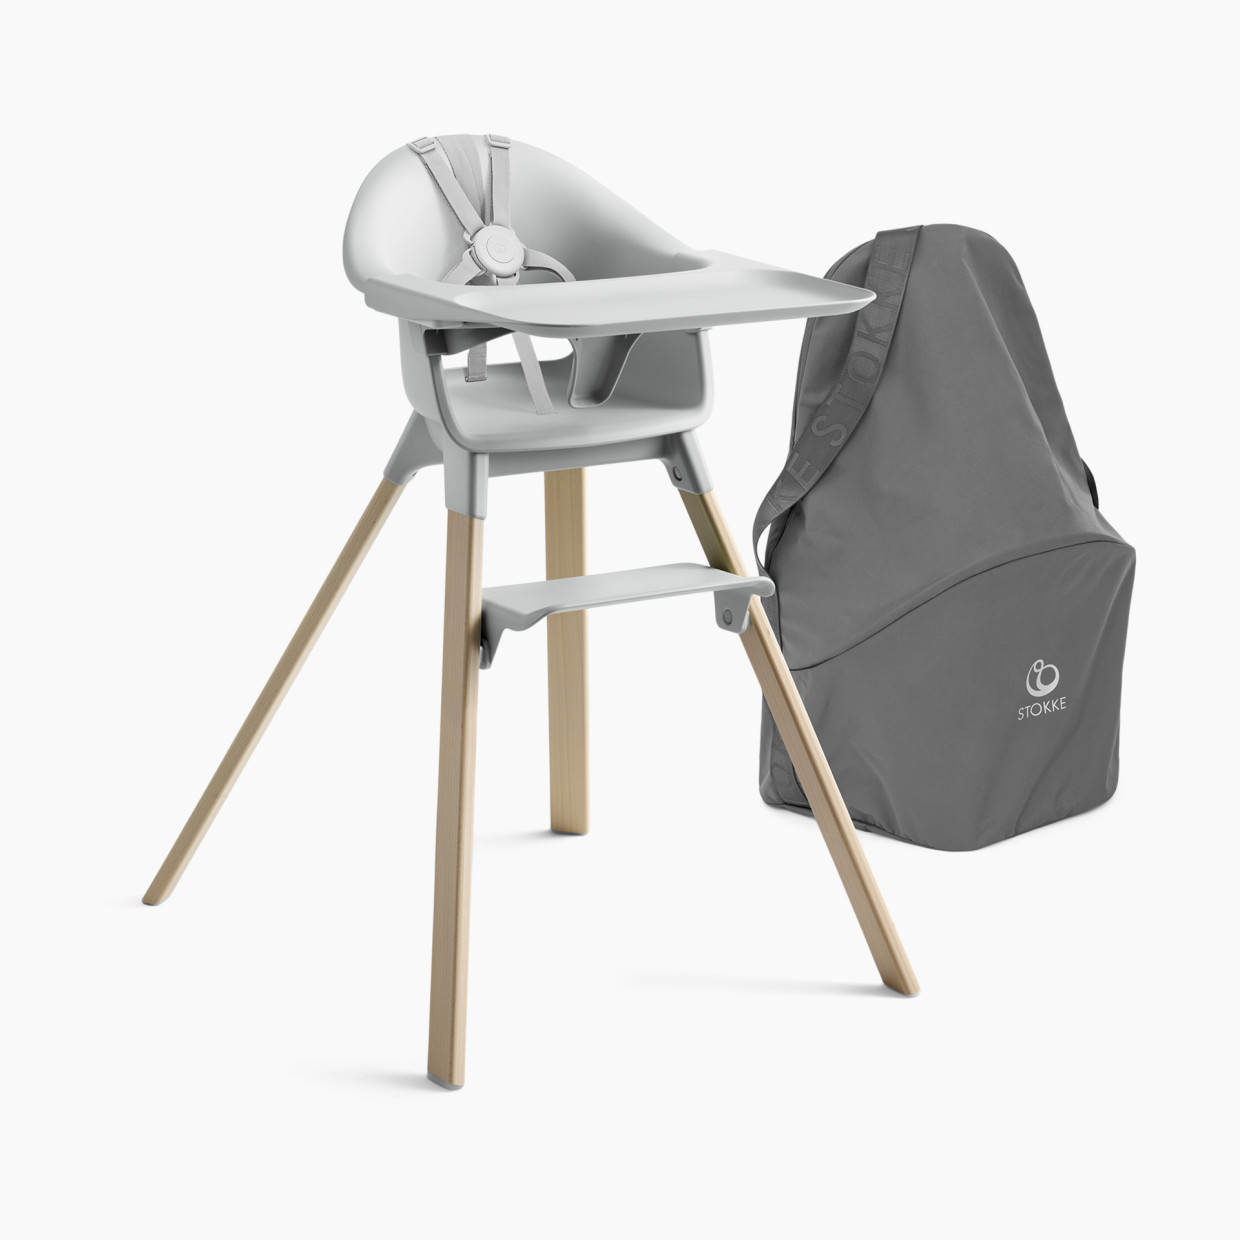 Stokke Clikk High Chair & Travel Bag Bundle - Grey.